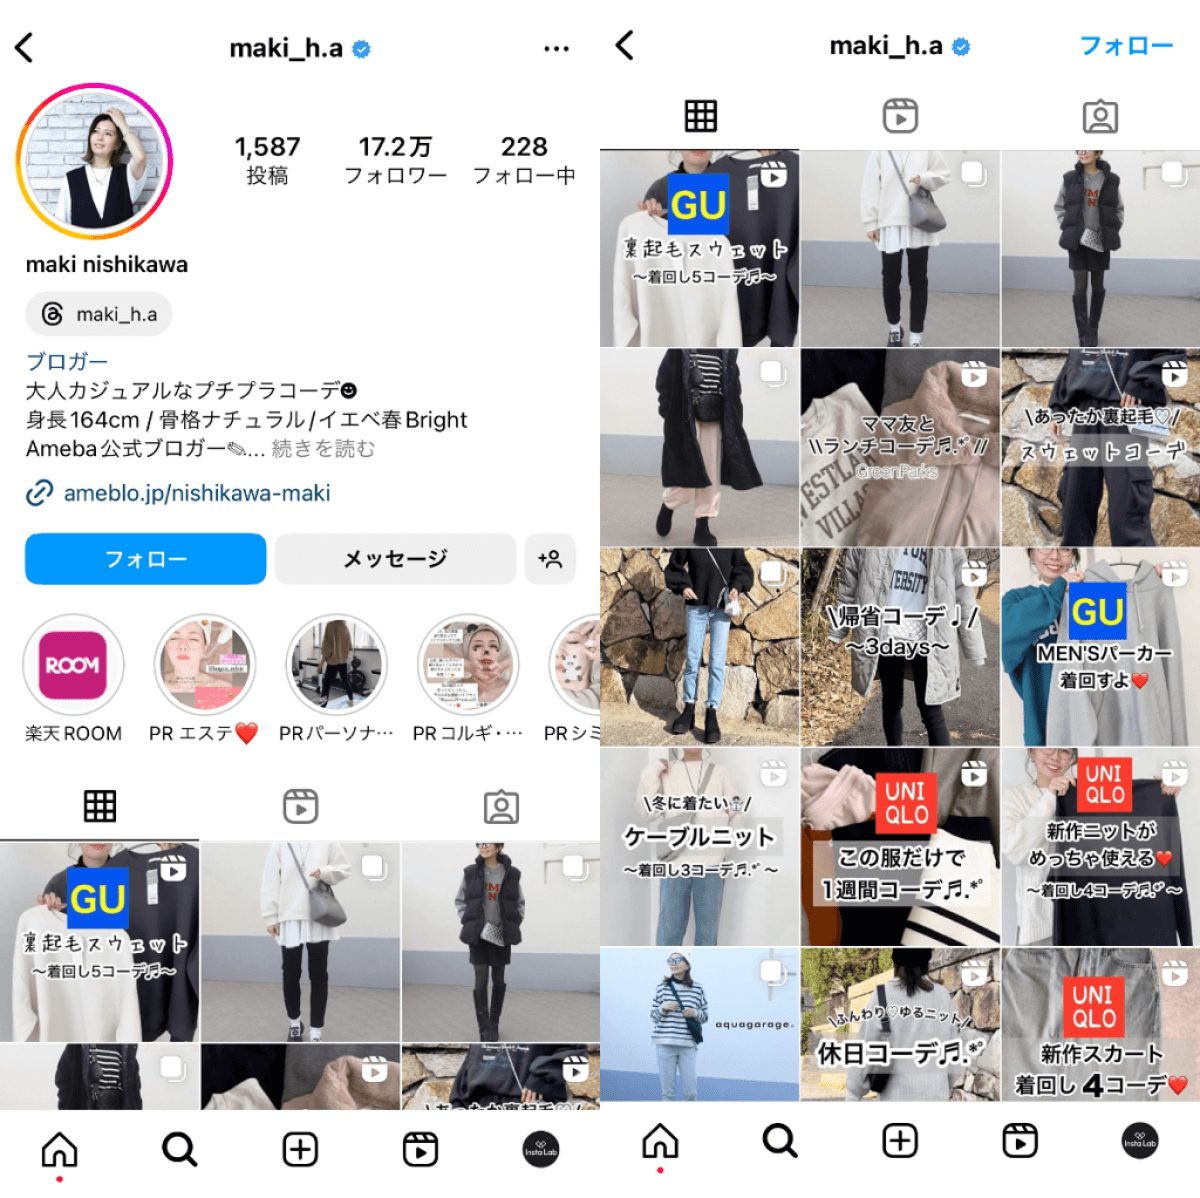 instagram-account-maki-ha